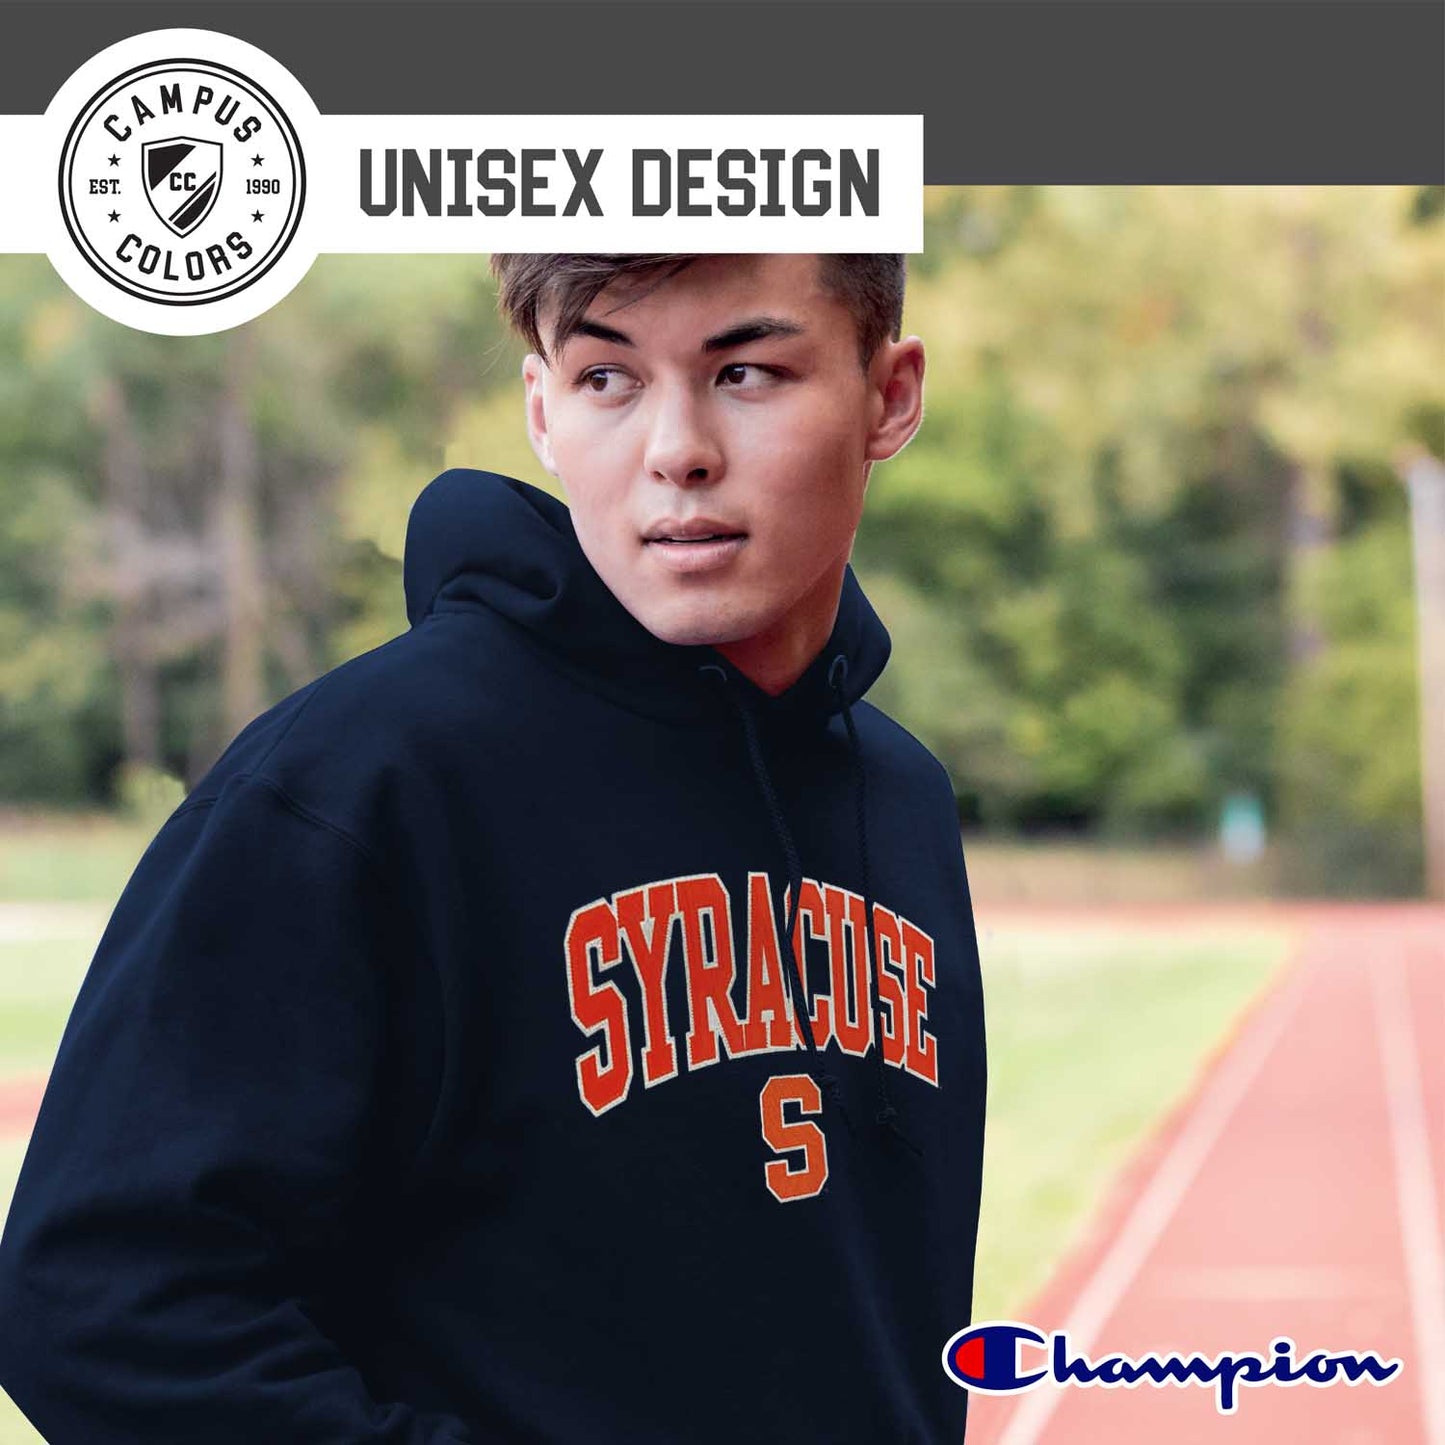 Syracuse Orange Champion Adult Tackle Twill Hooded Sweatshirt - Navy